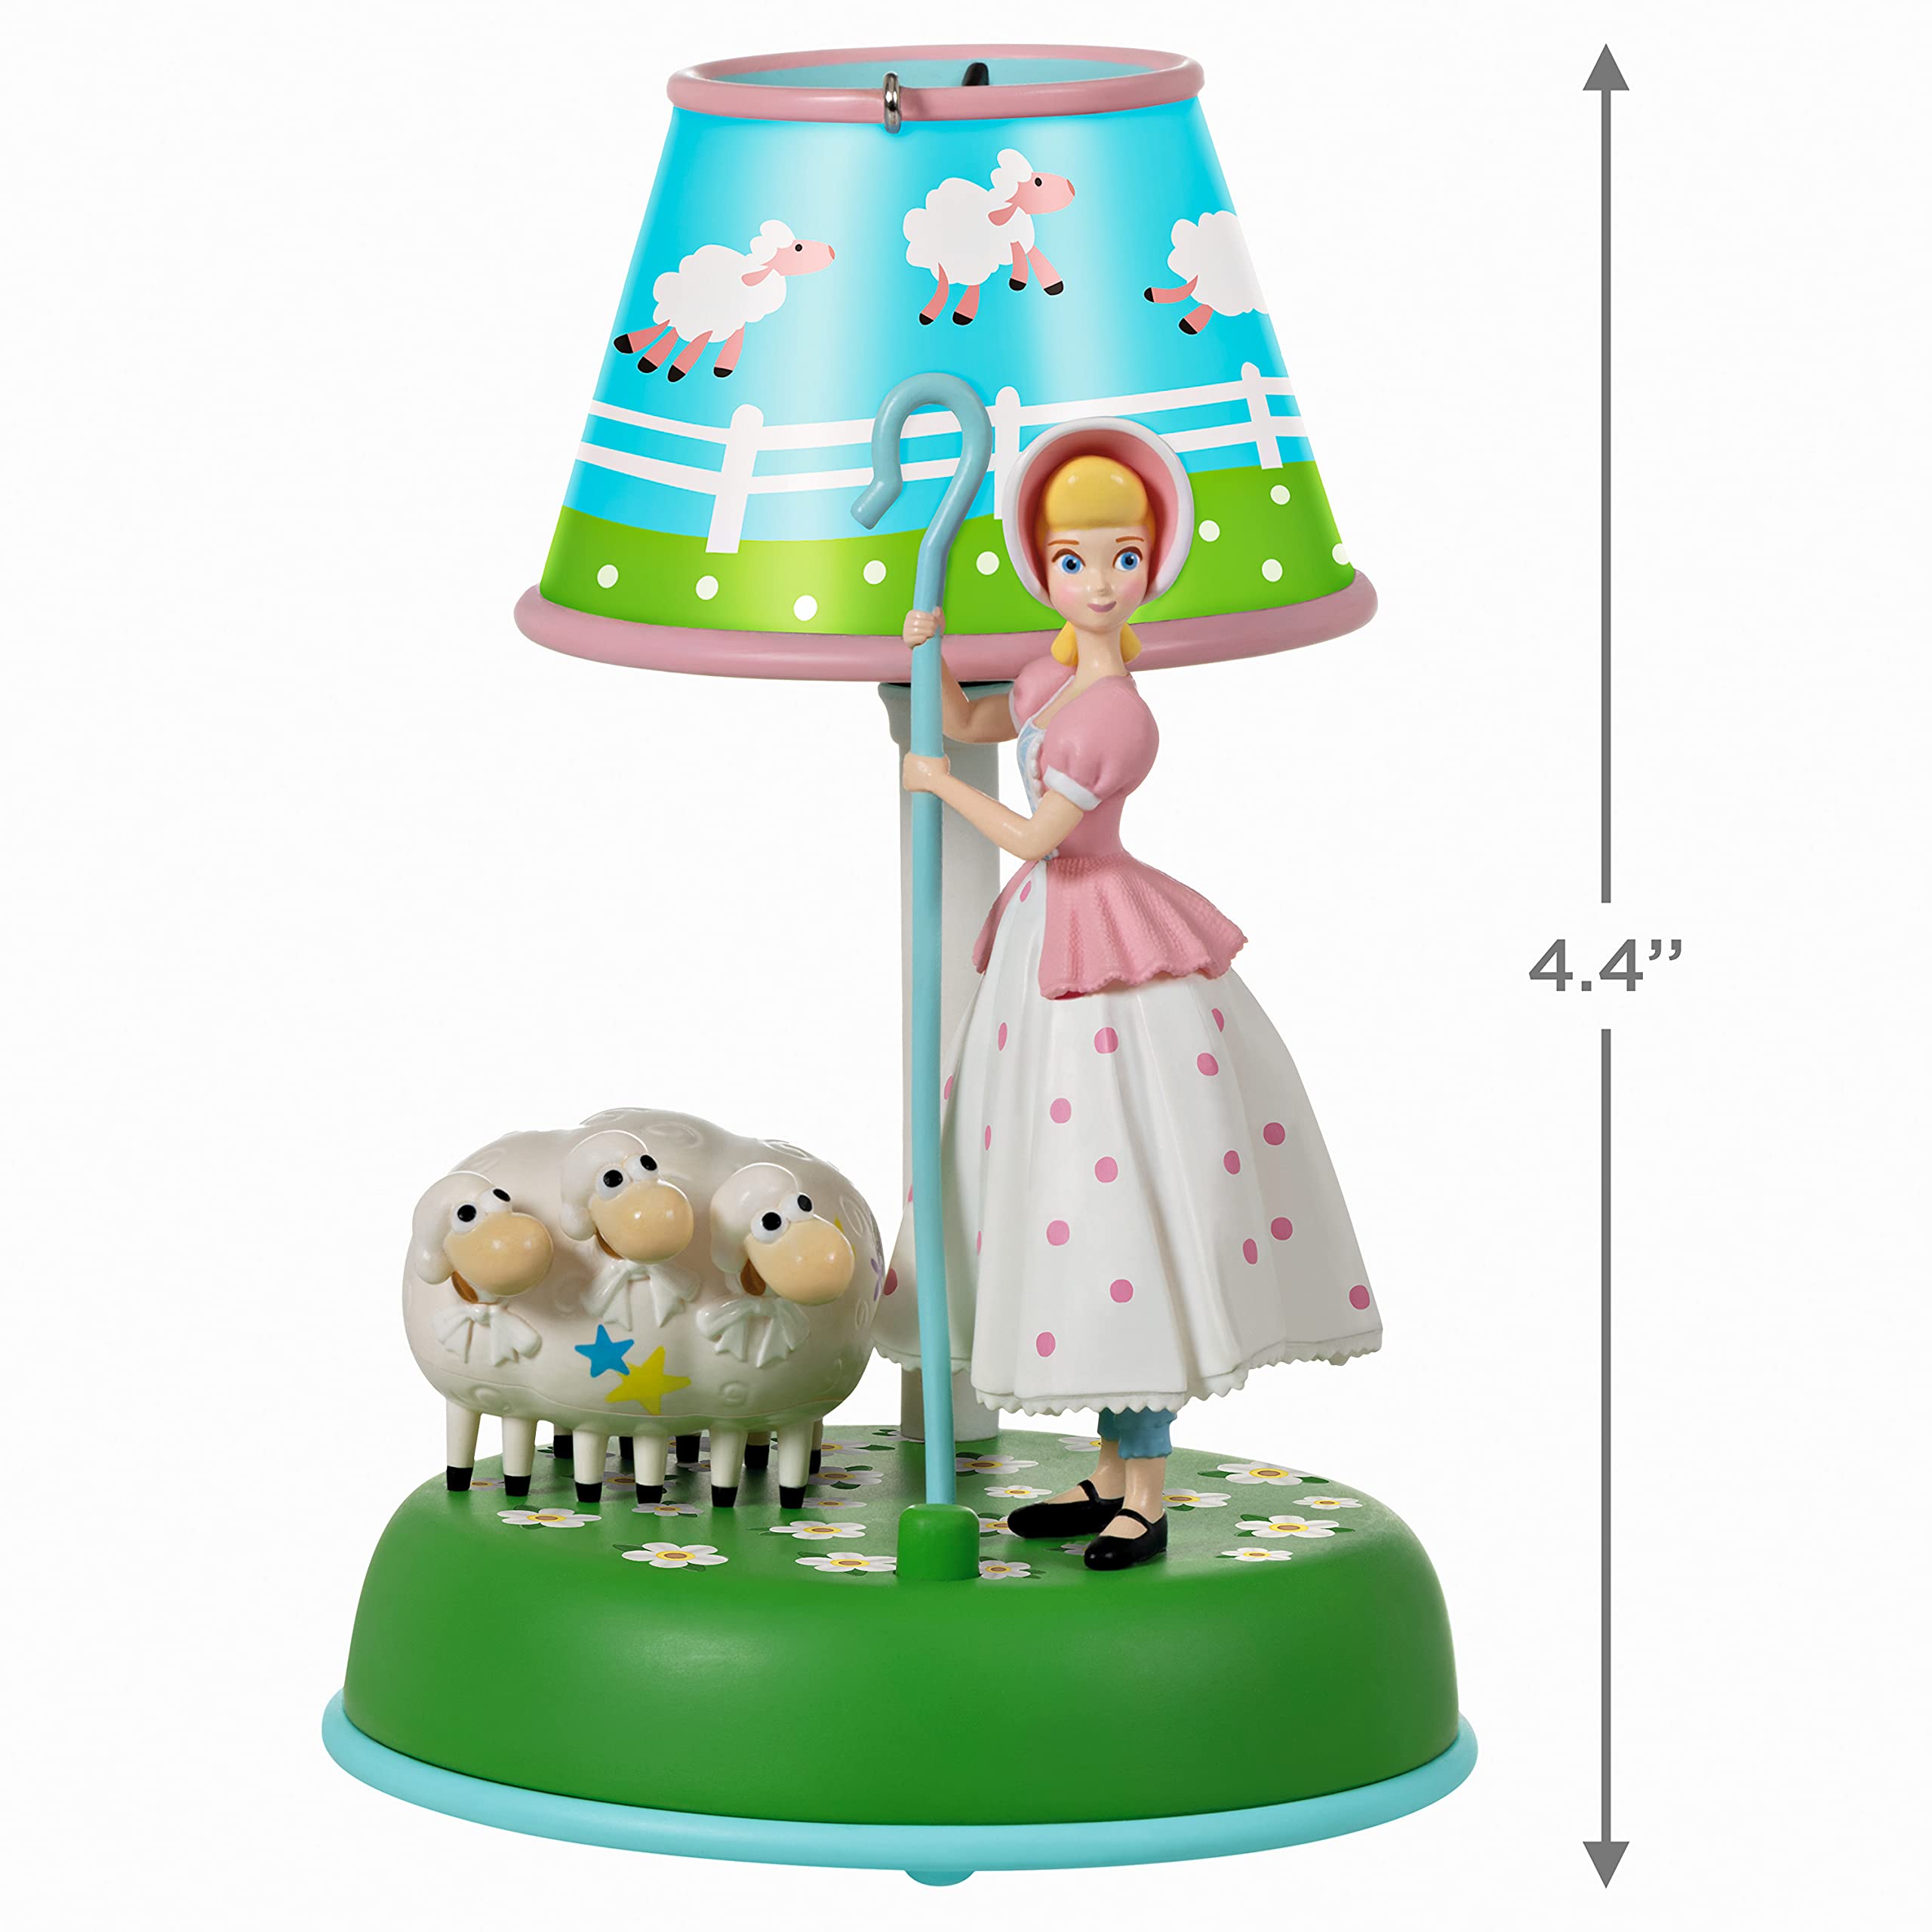 Hallmark Keepsake Christmas Ornament 2021, Disney/Pixar Toy Story Bo Peep and Her Sheep Lamp, Light